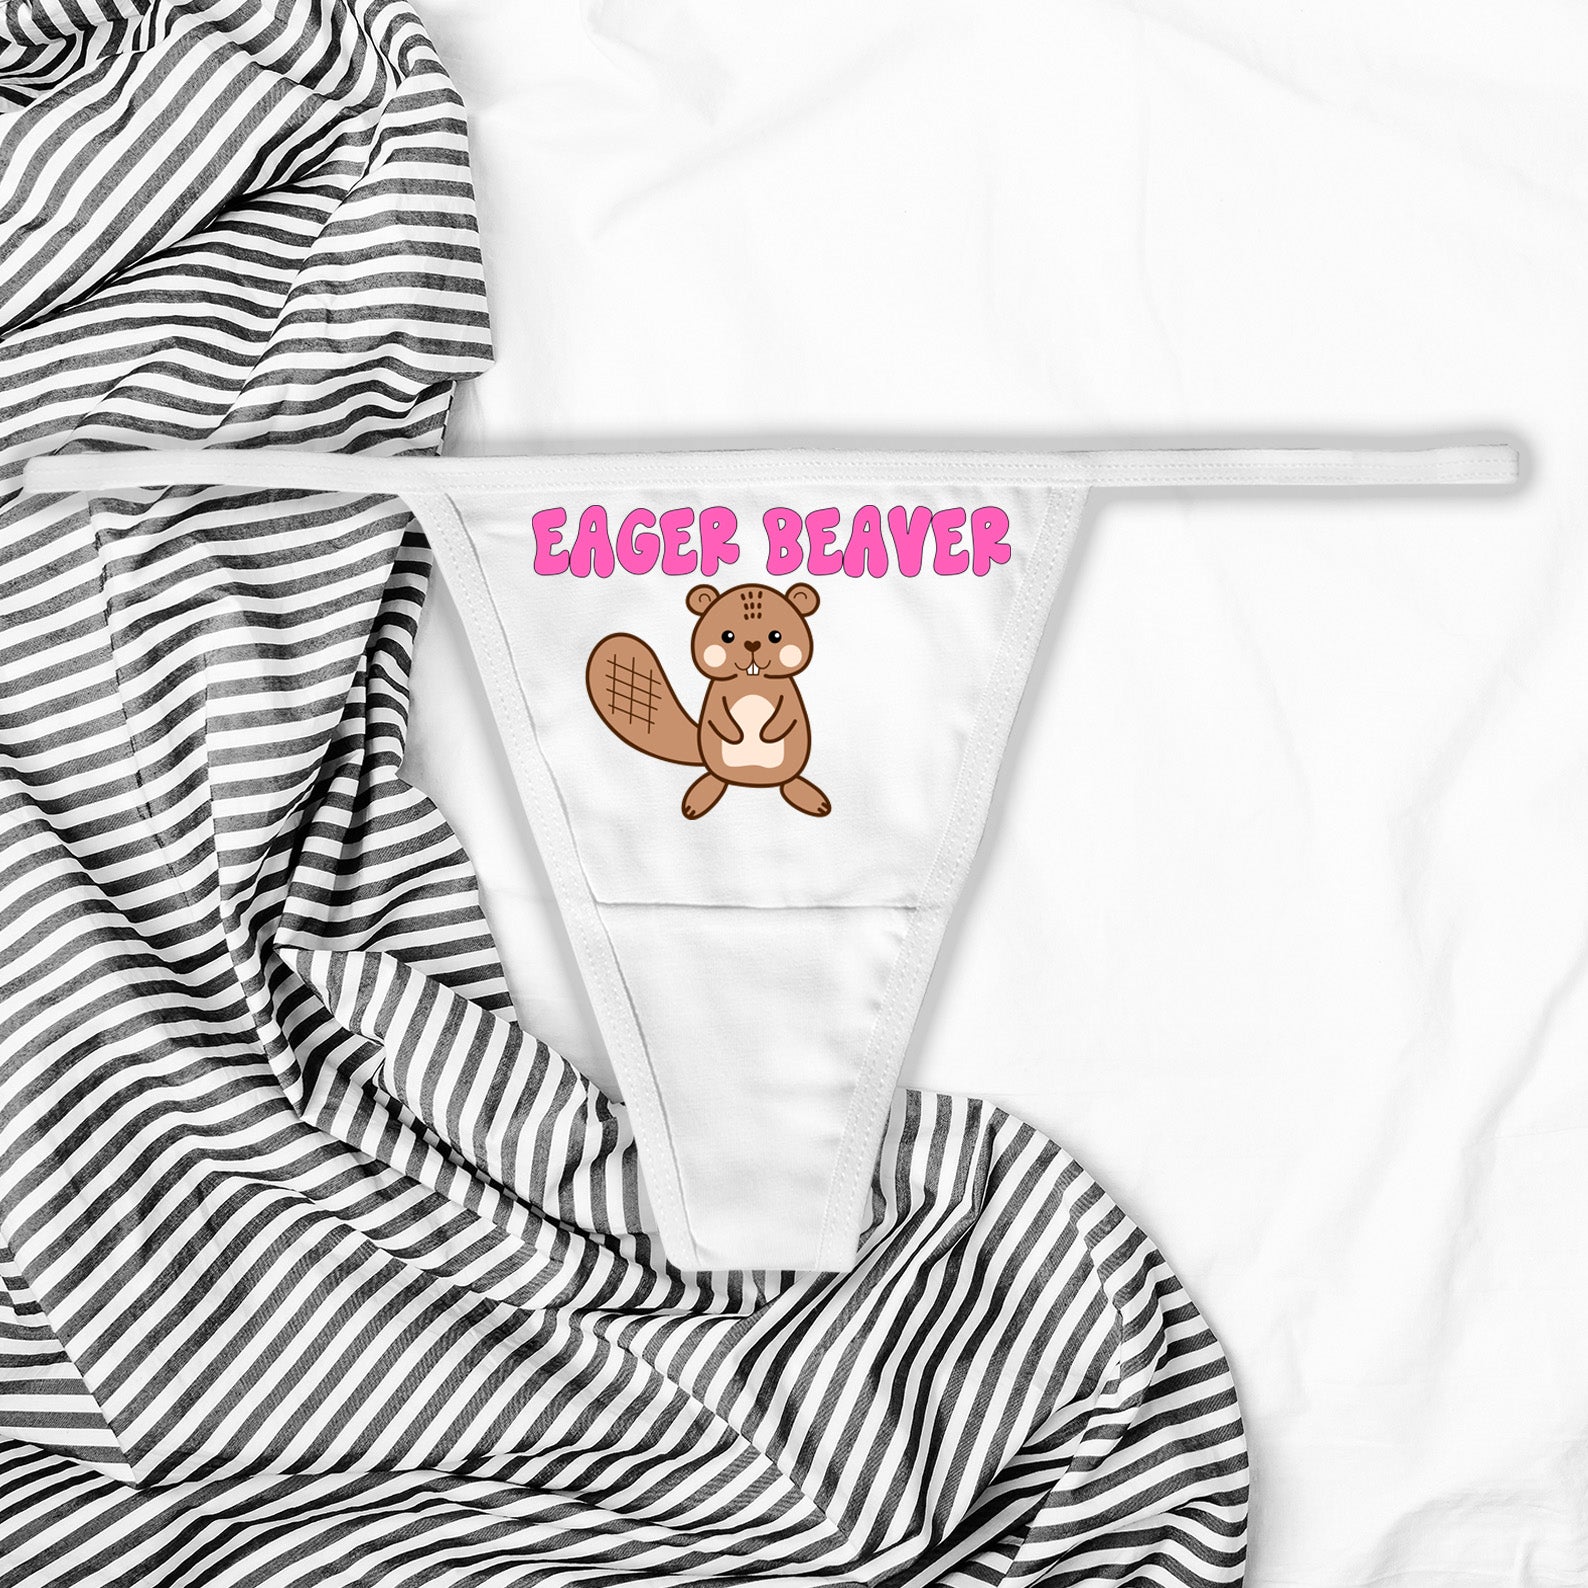 Eager Beaver Thong